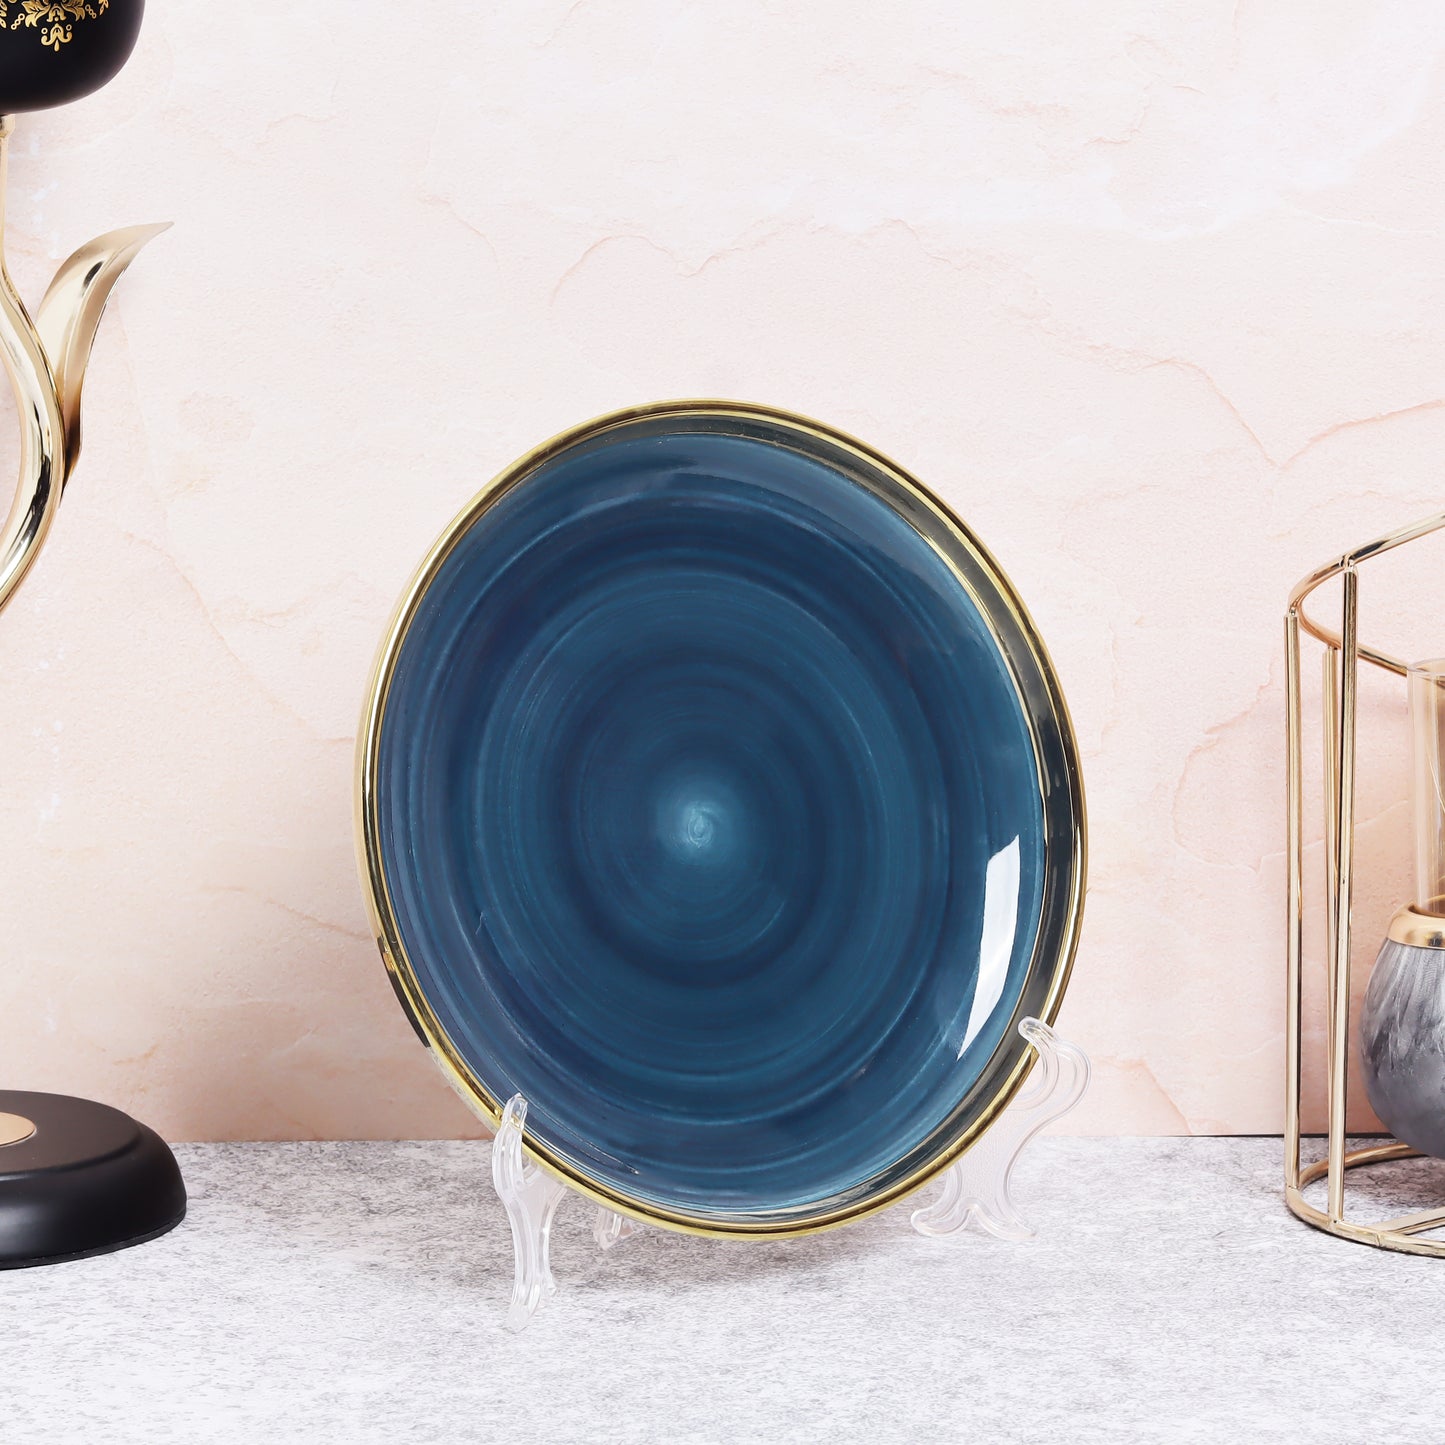 Classic ceramic dinner plate in pristine white - perfect for elegant dining settings.